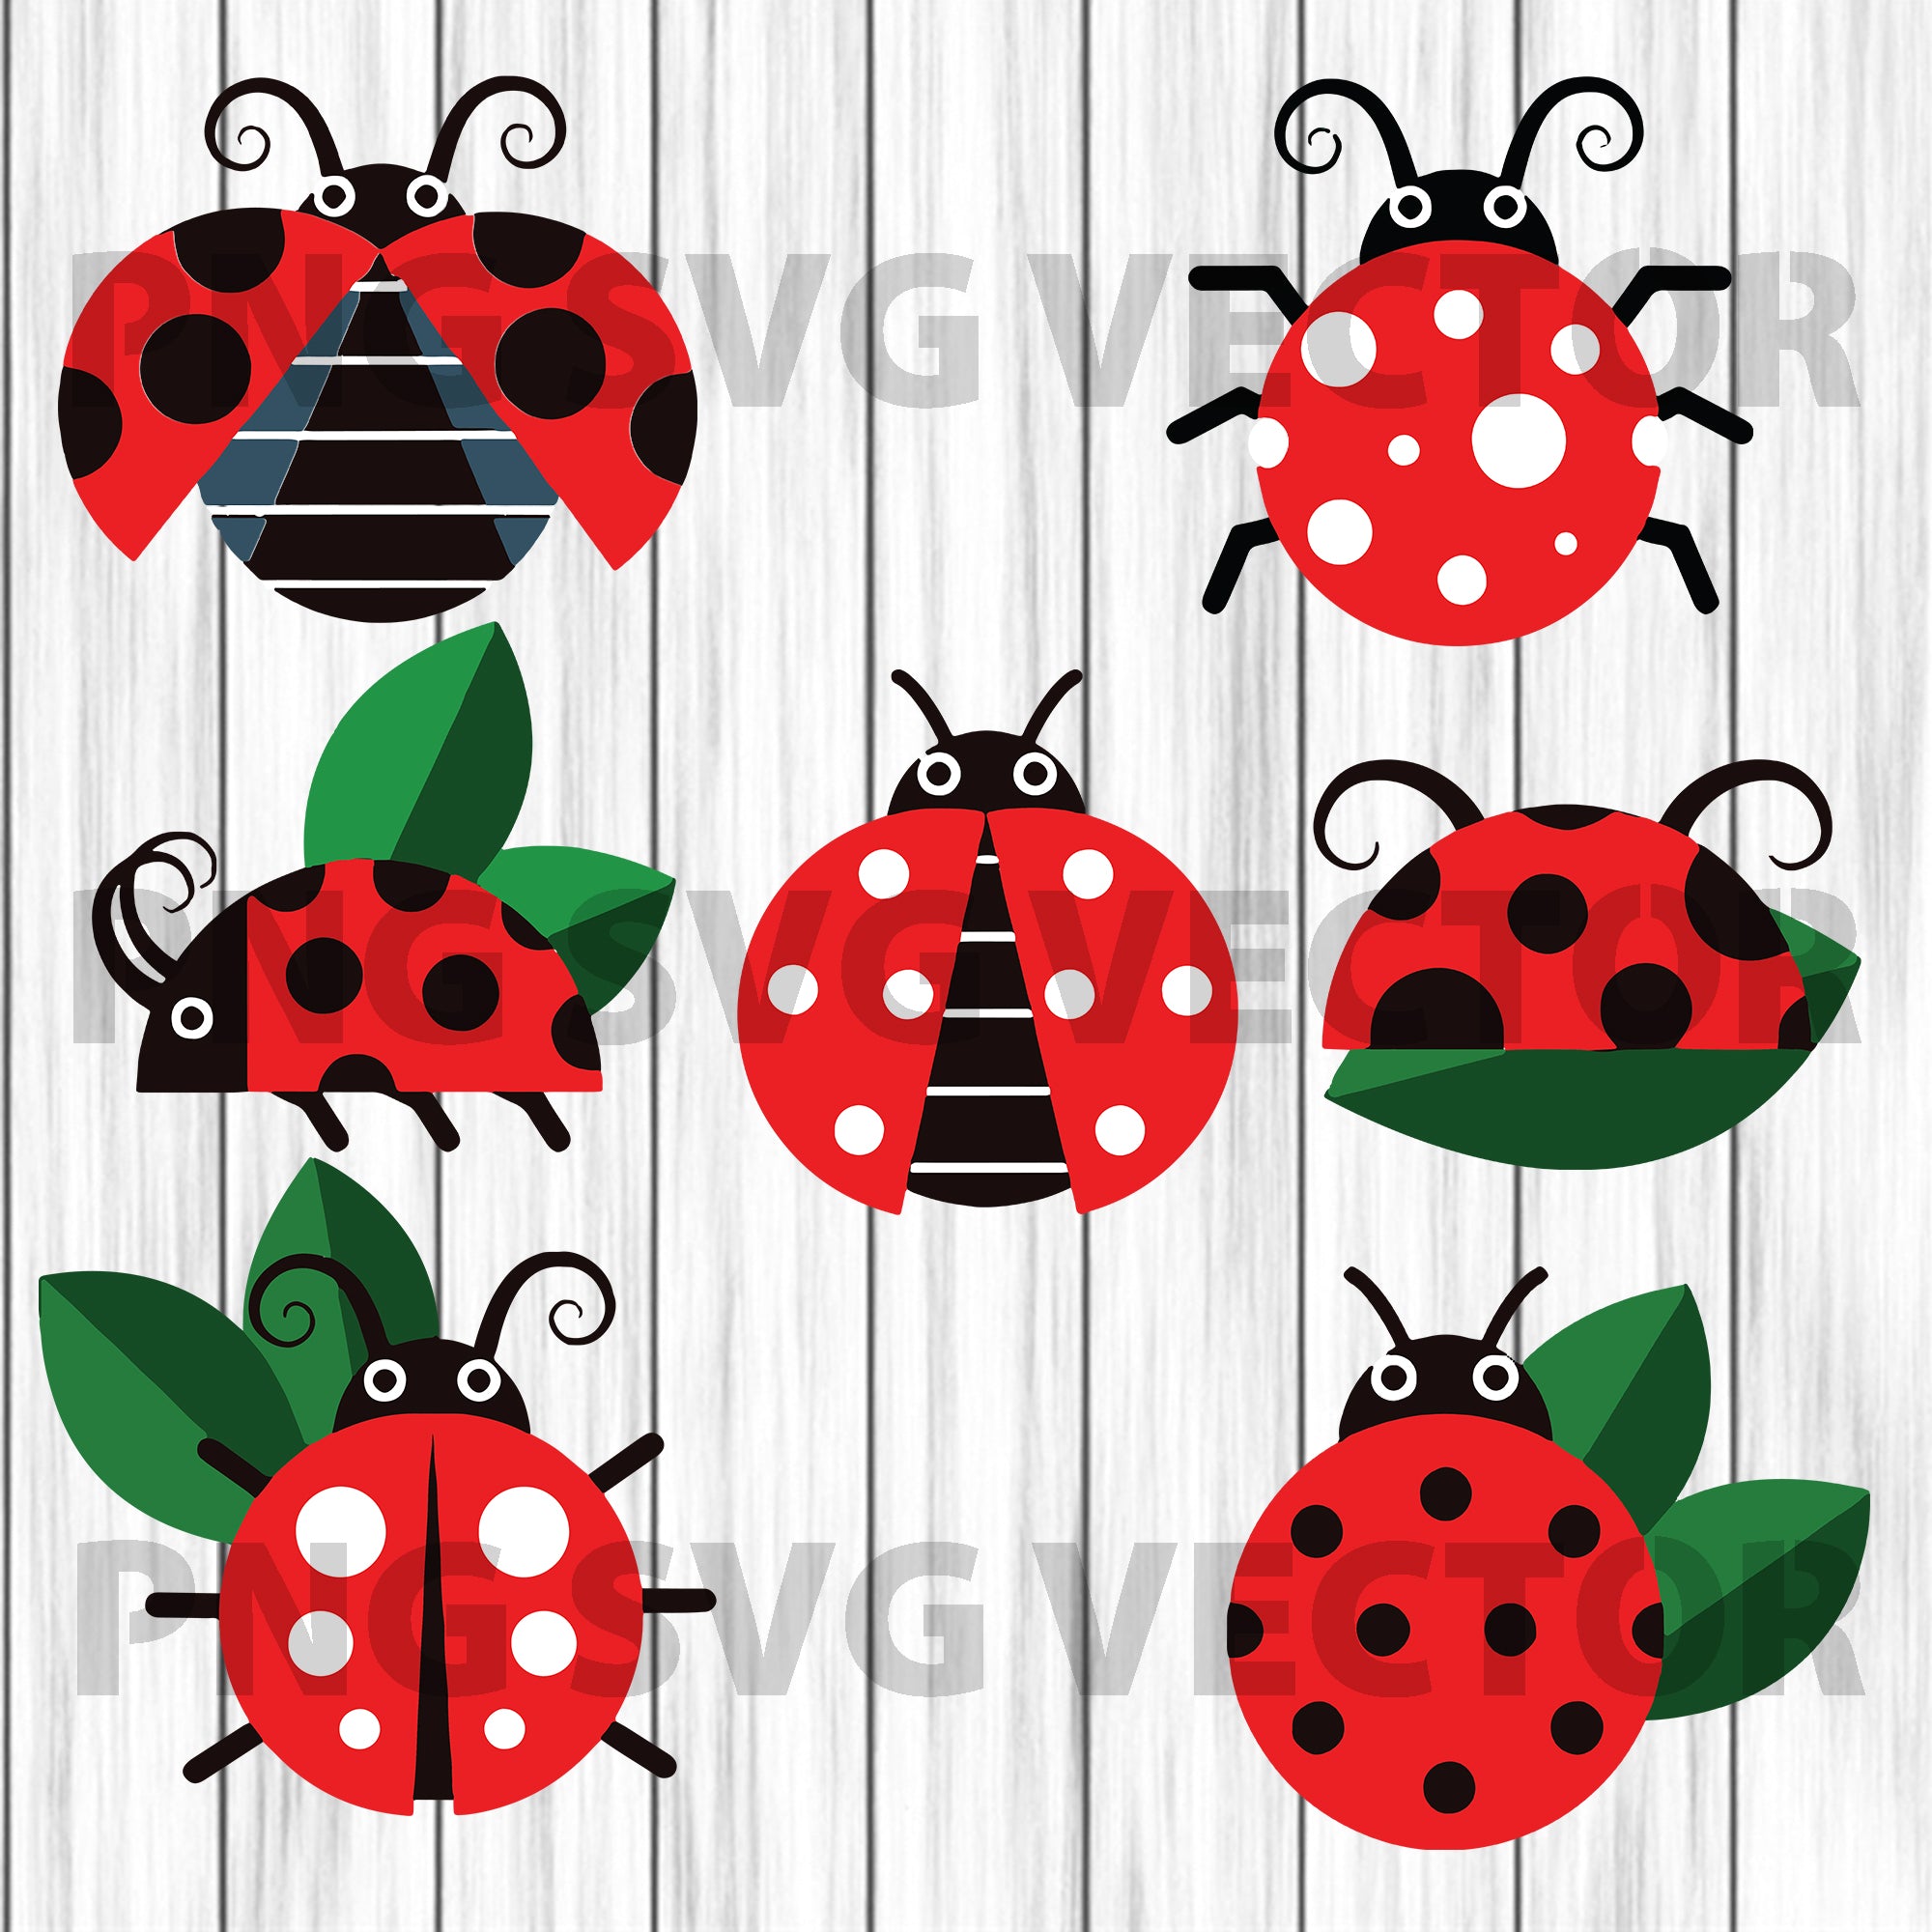 Download Ladybug Svg Ladybug Clipart Ladybug Cutting File Ladybug File For C Beetanosvg Scalable Vector Graphics